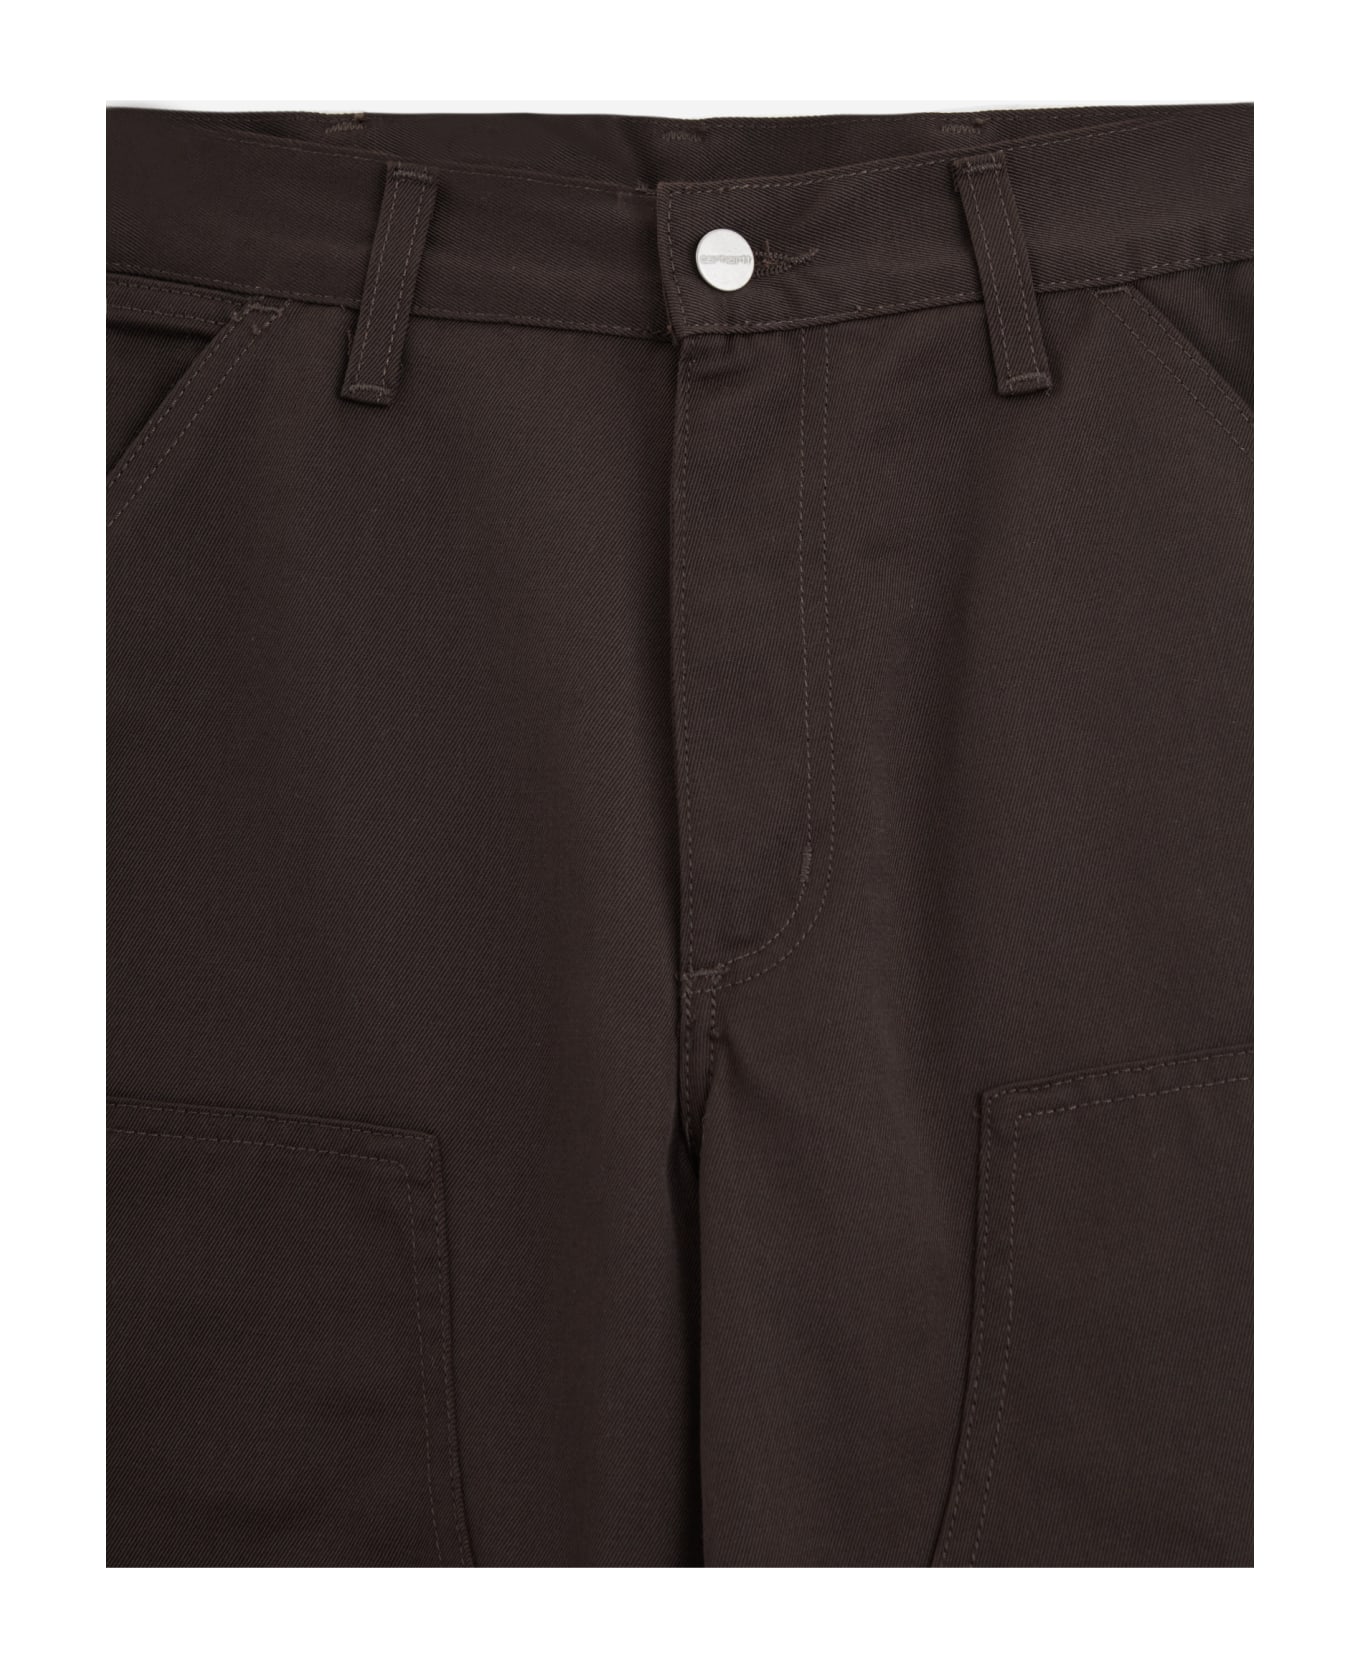 Carhartt Double Knee Pants - brown